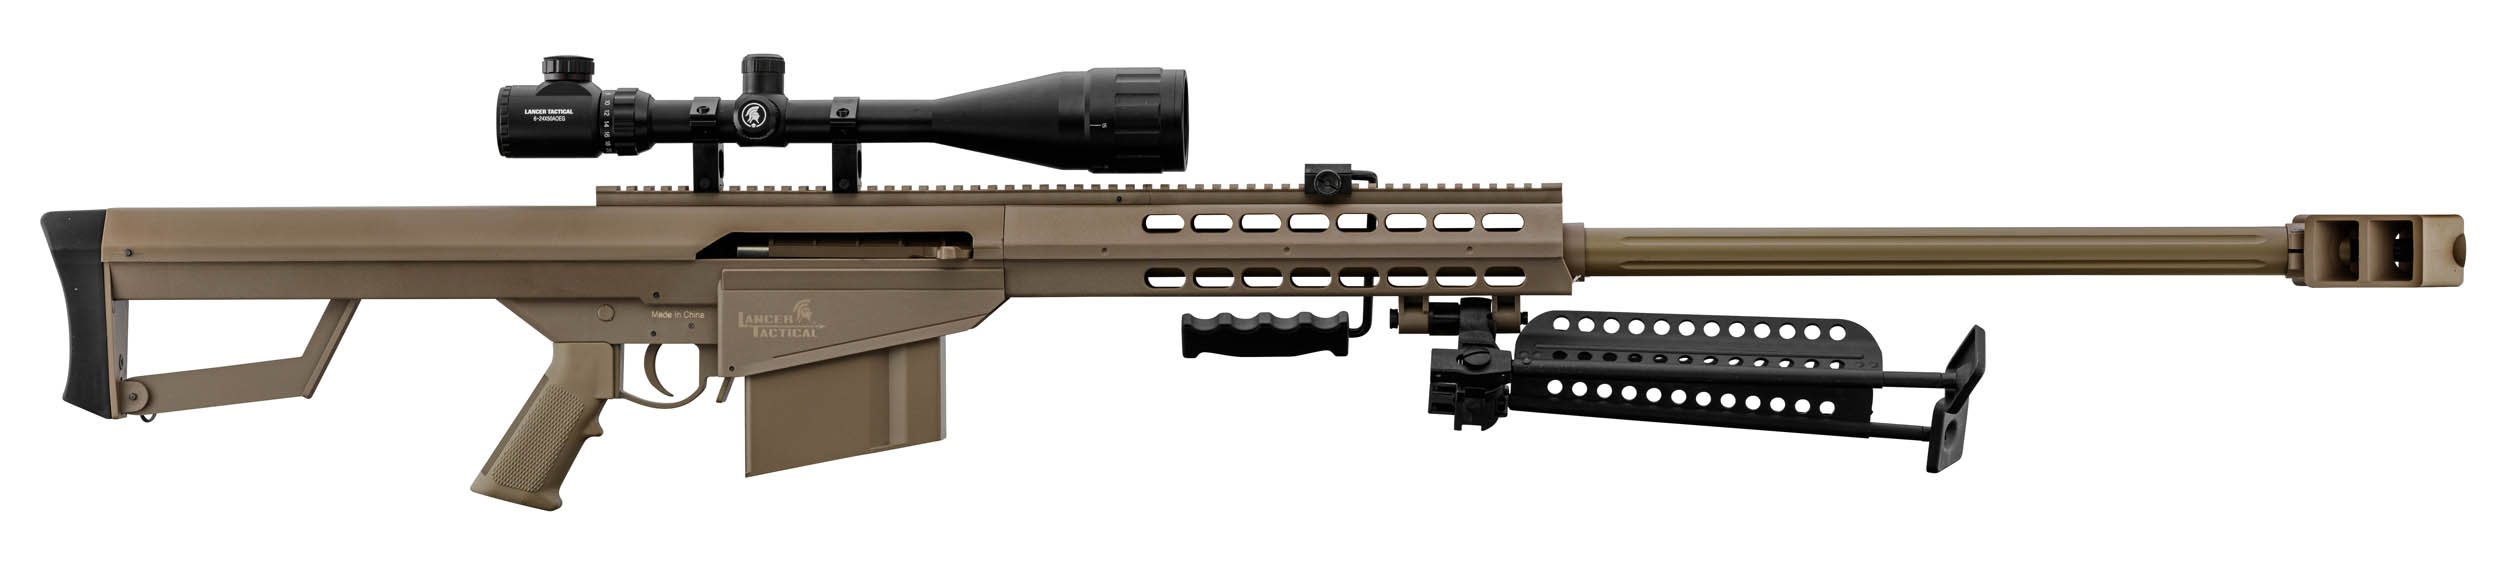 PCKLR3052-10 Pack Sniper LT-20 tan M82 1,5J + lunette + bi-pied + poignée